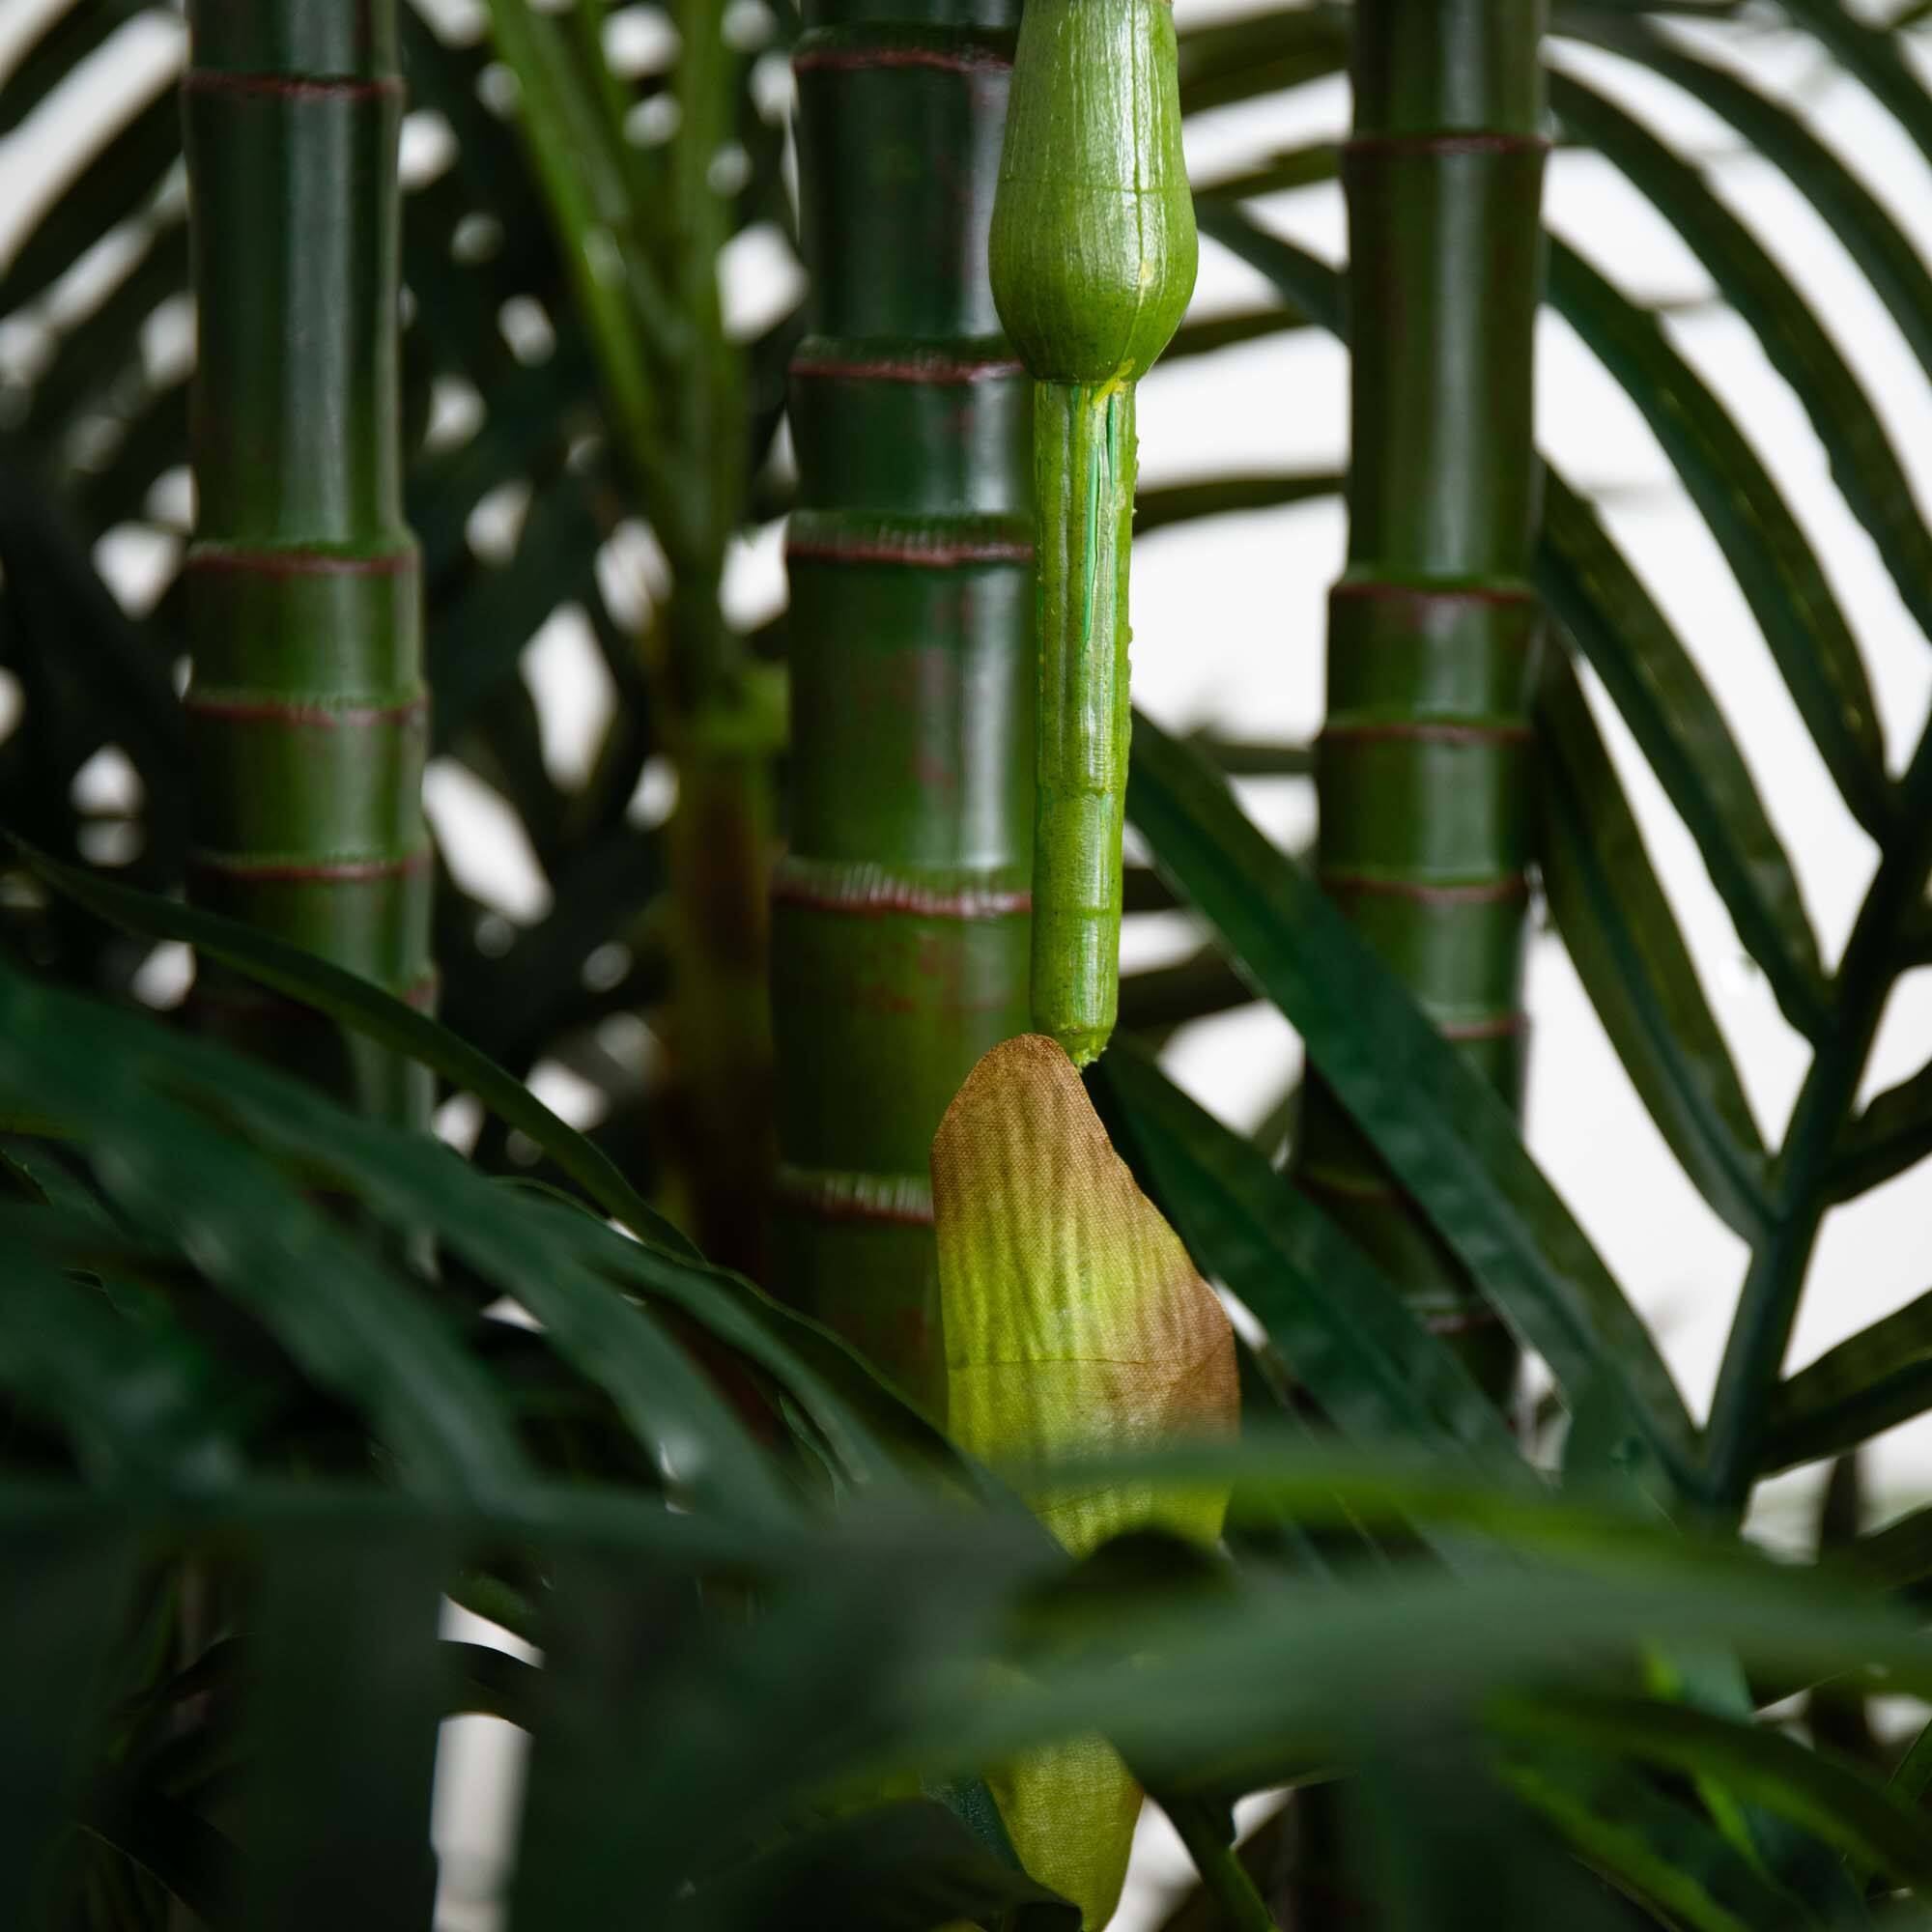 9ft. UV Resistant Areca Palm Tree